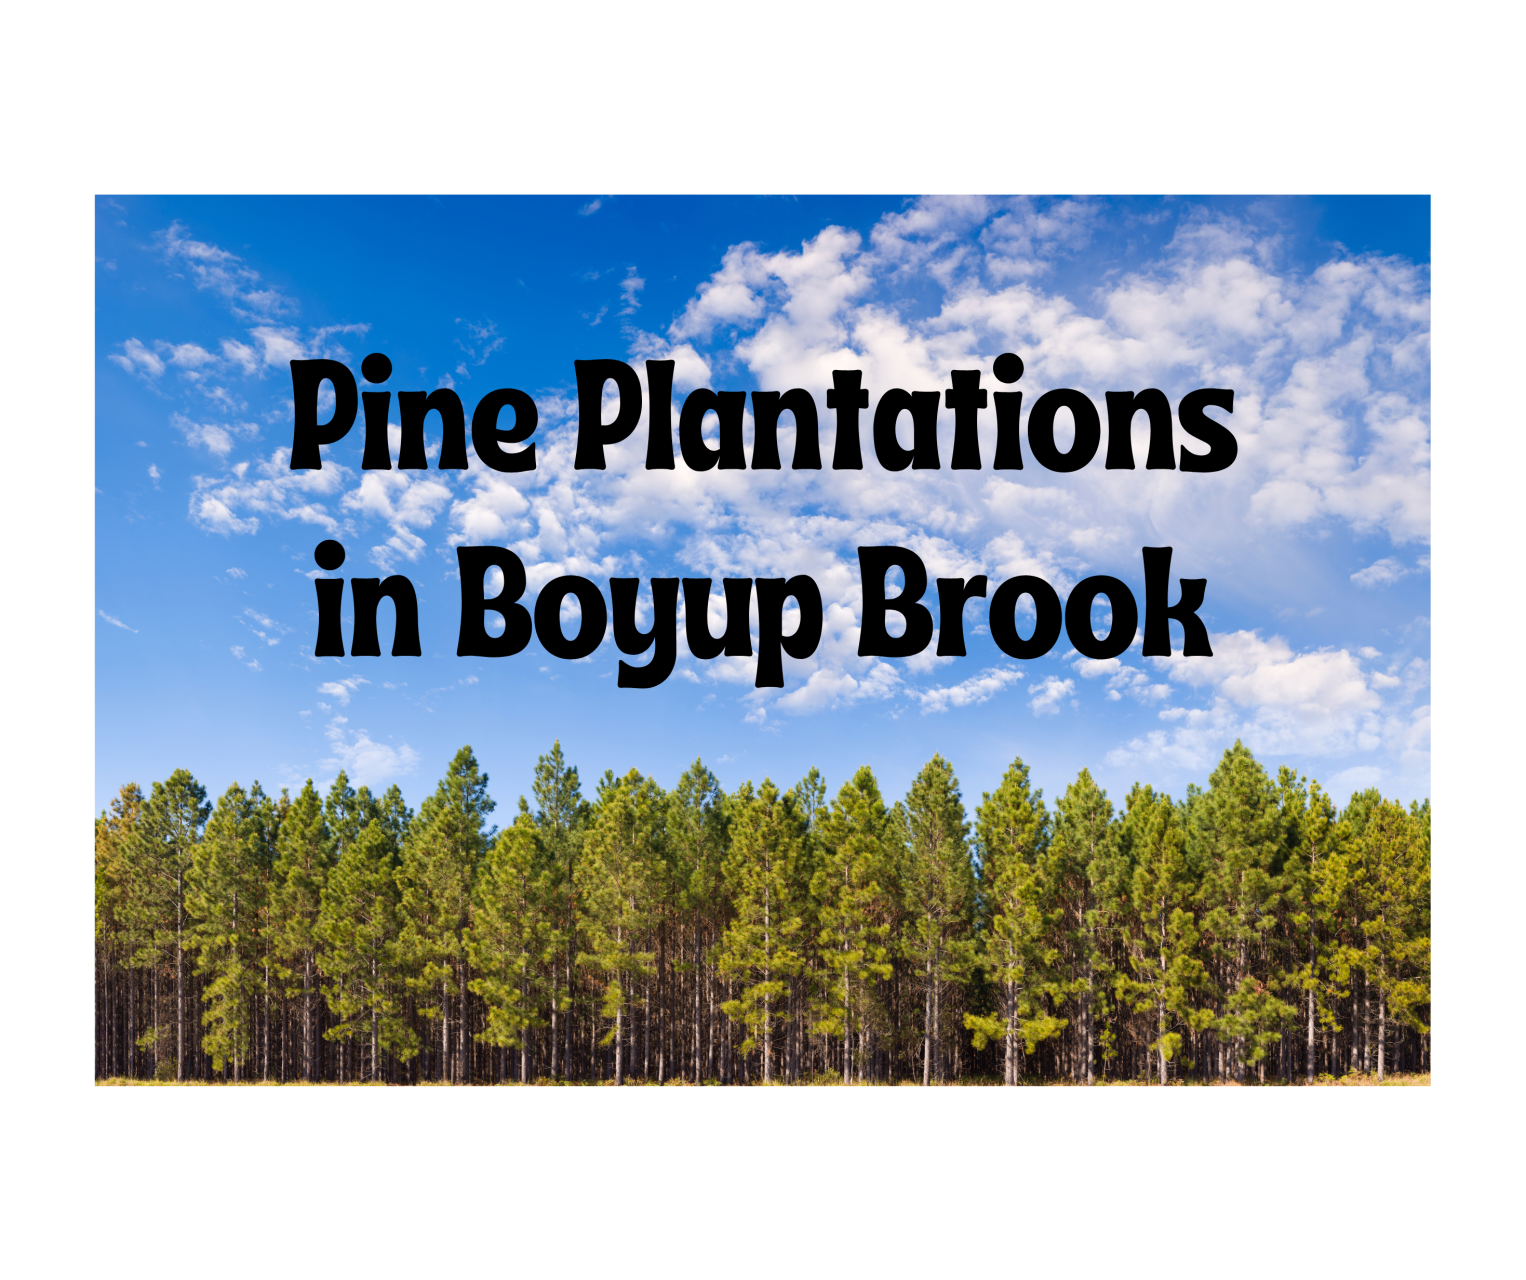 Pine Plantations in Boyup Brook